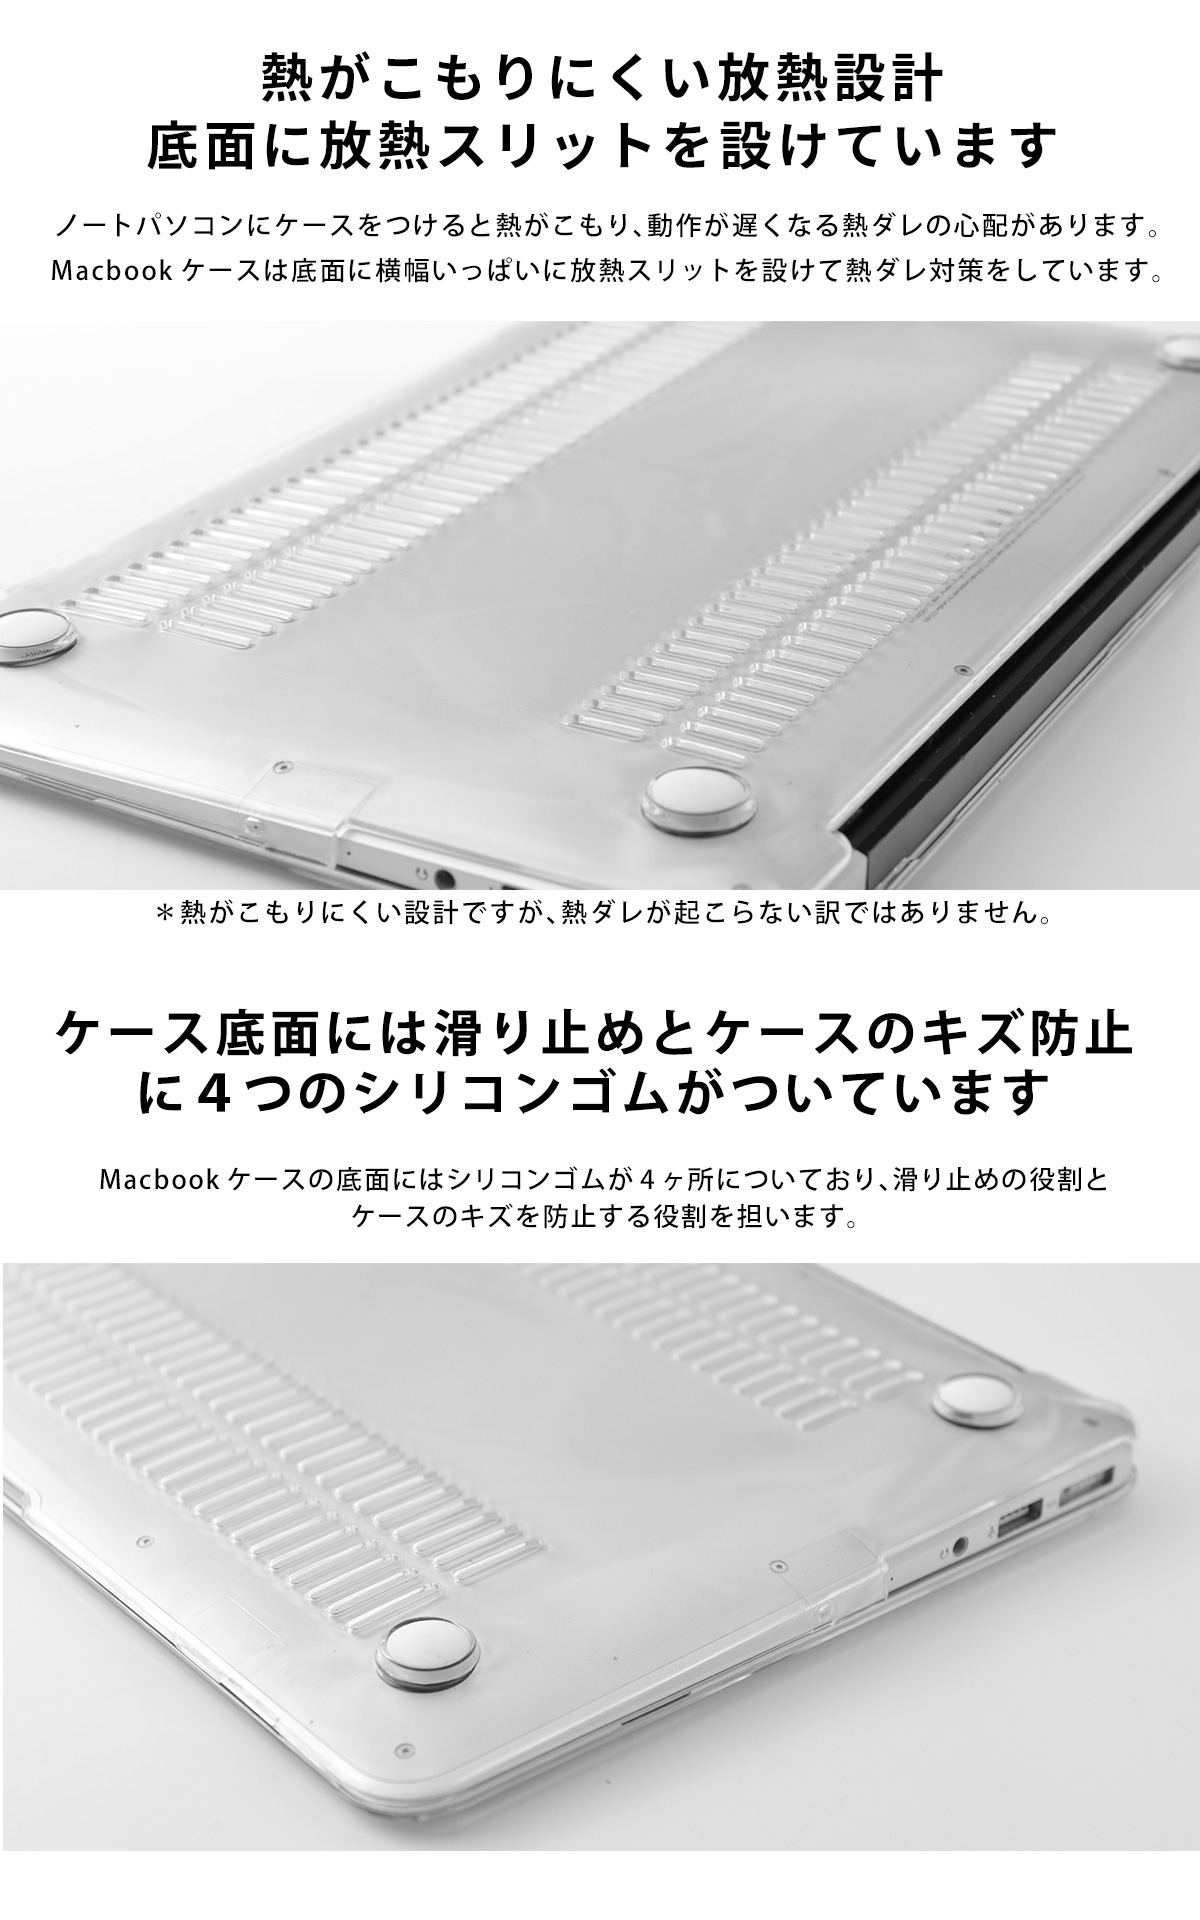 Macbookケース底面は放熱フィンとキズ・滑り止め防止用シリコンゴムがついています